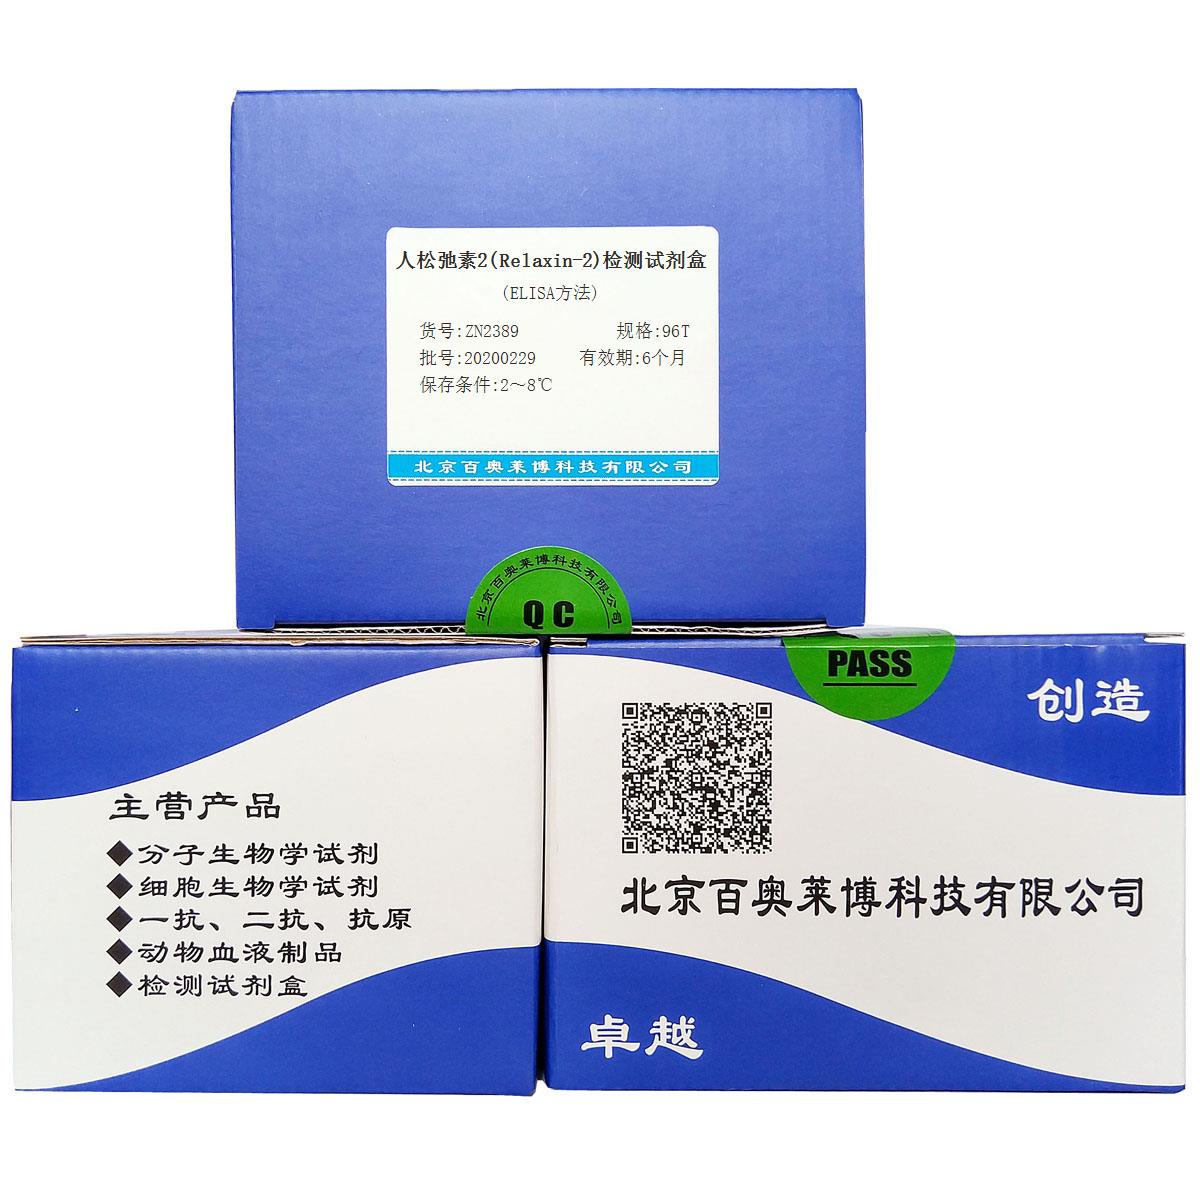 人松弛素2(Relaxin-2)检测试剂盒(ELISA方法)